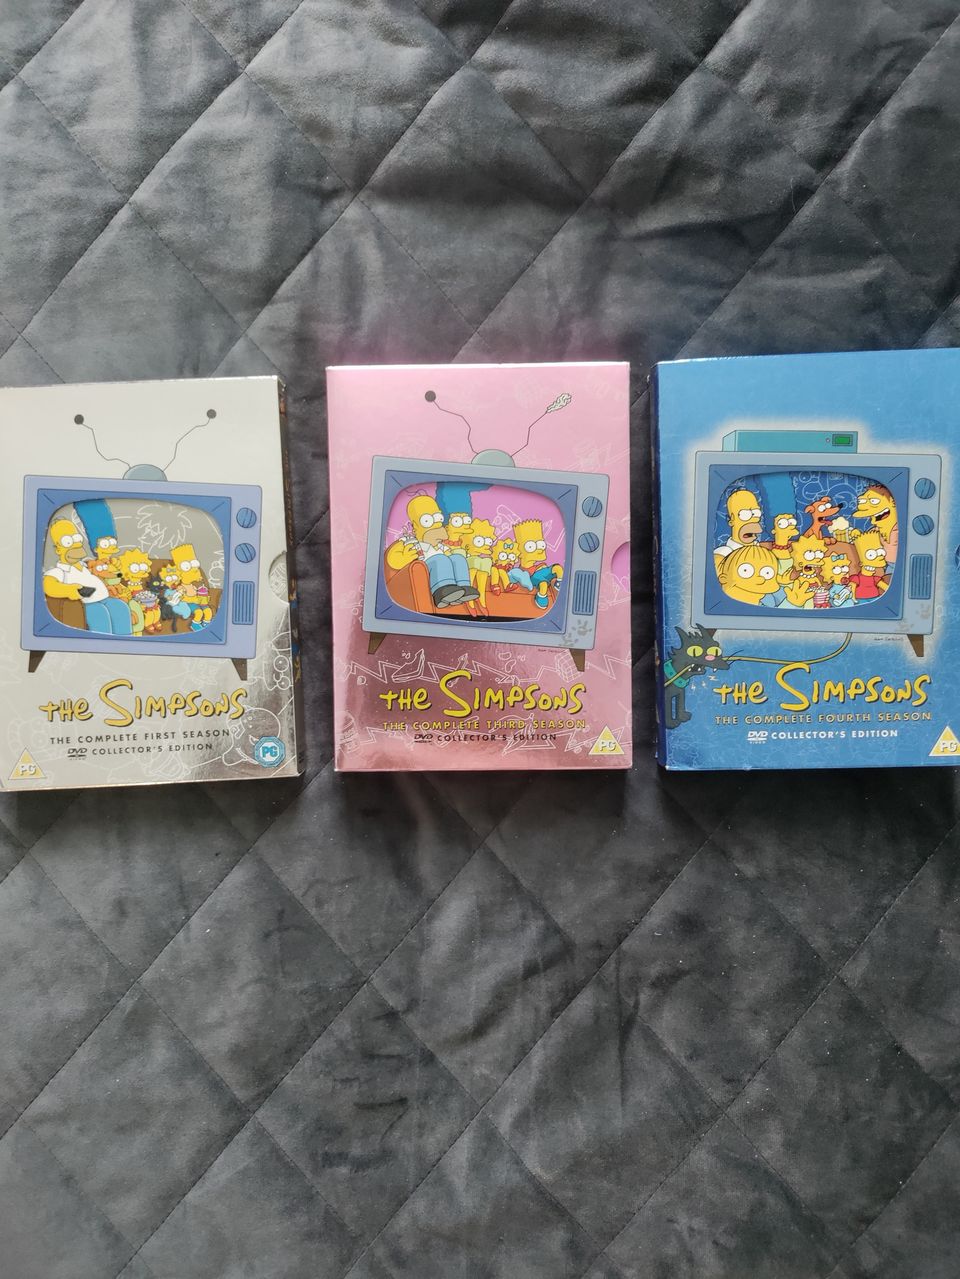 Simpsons boxit